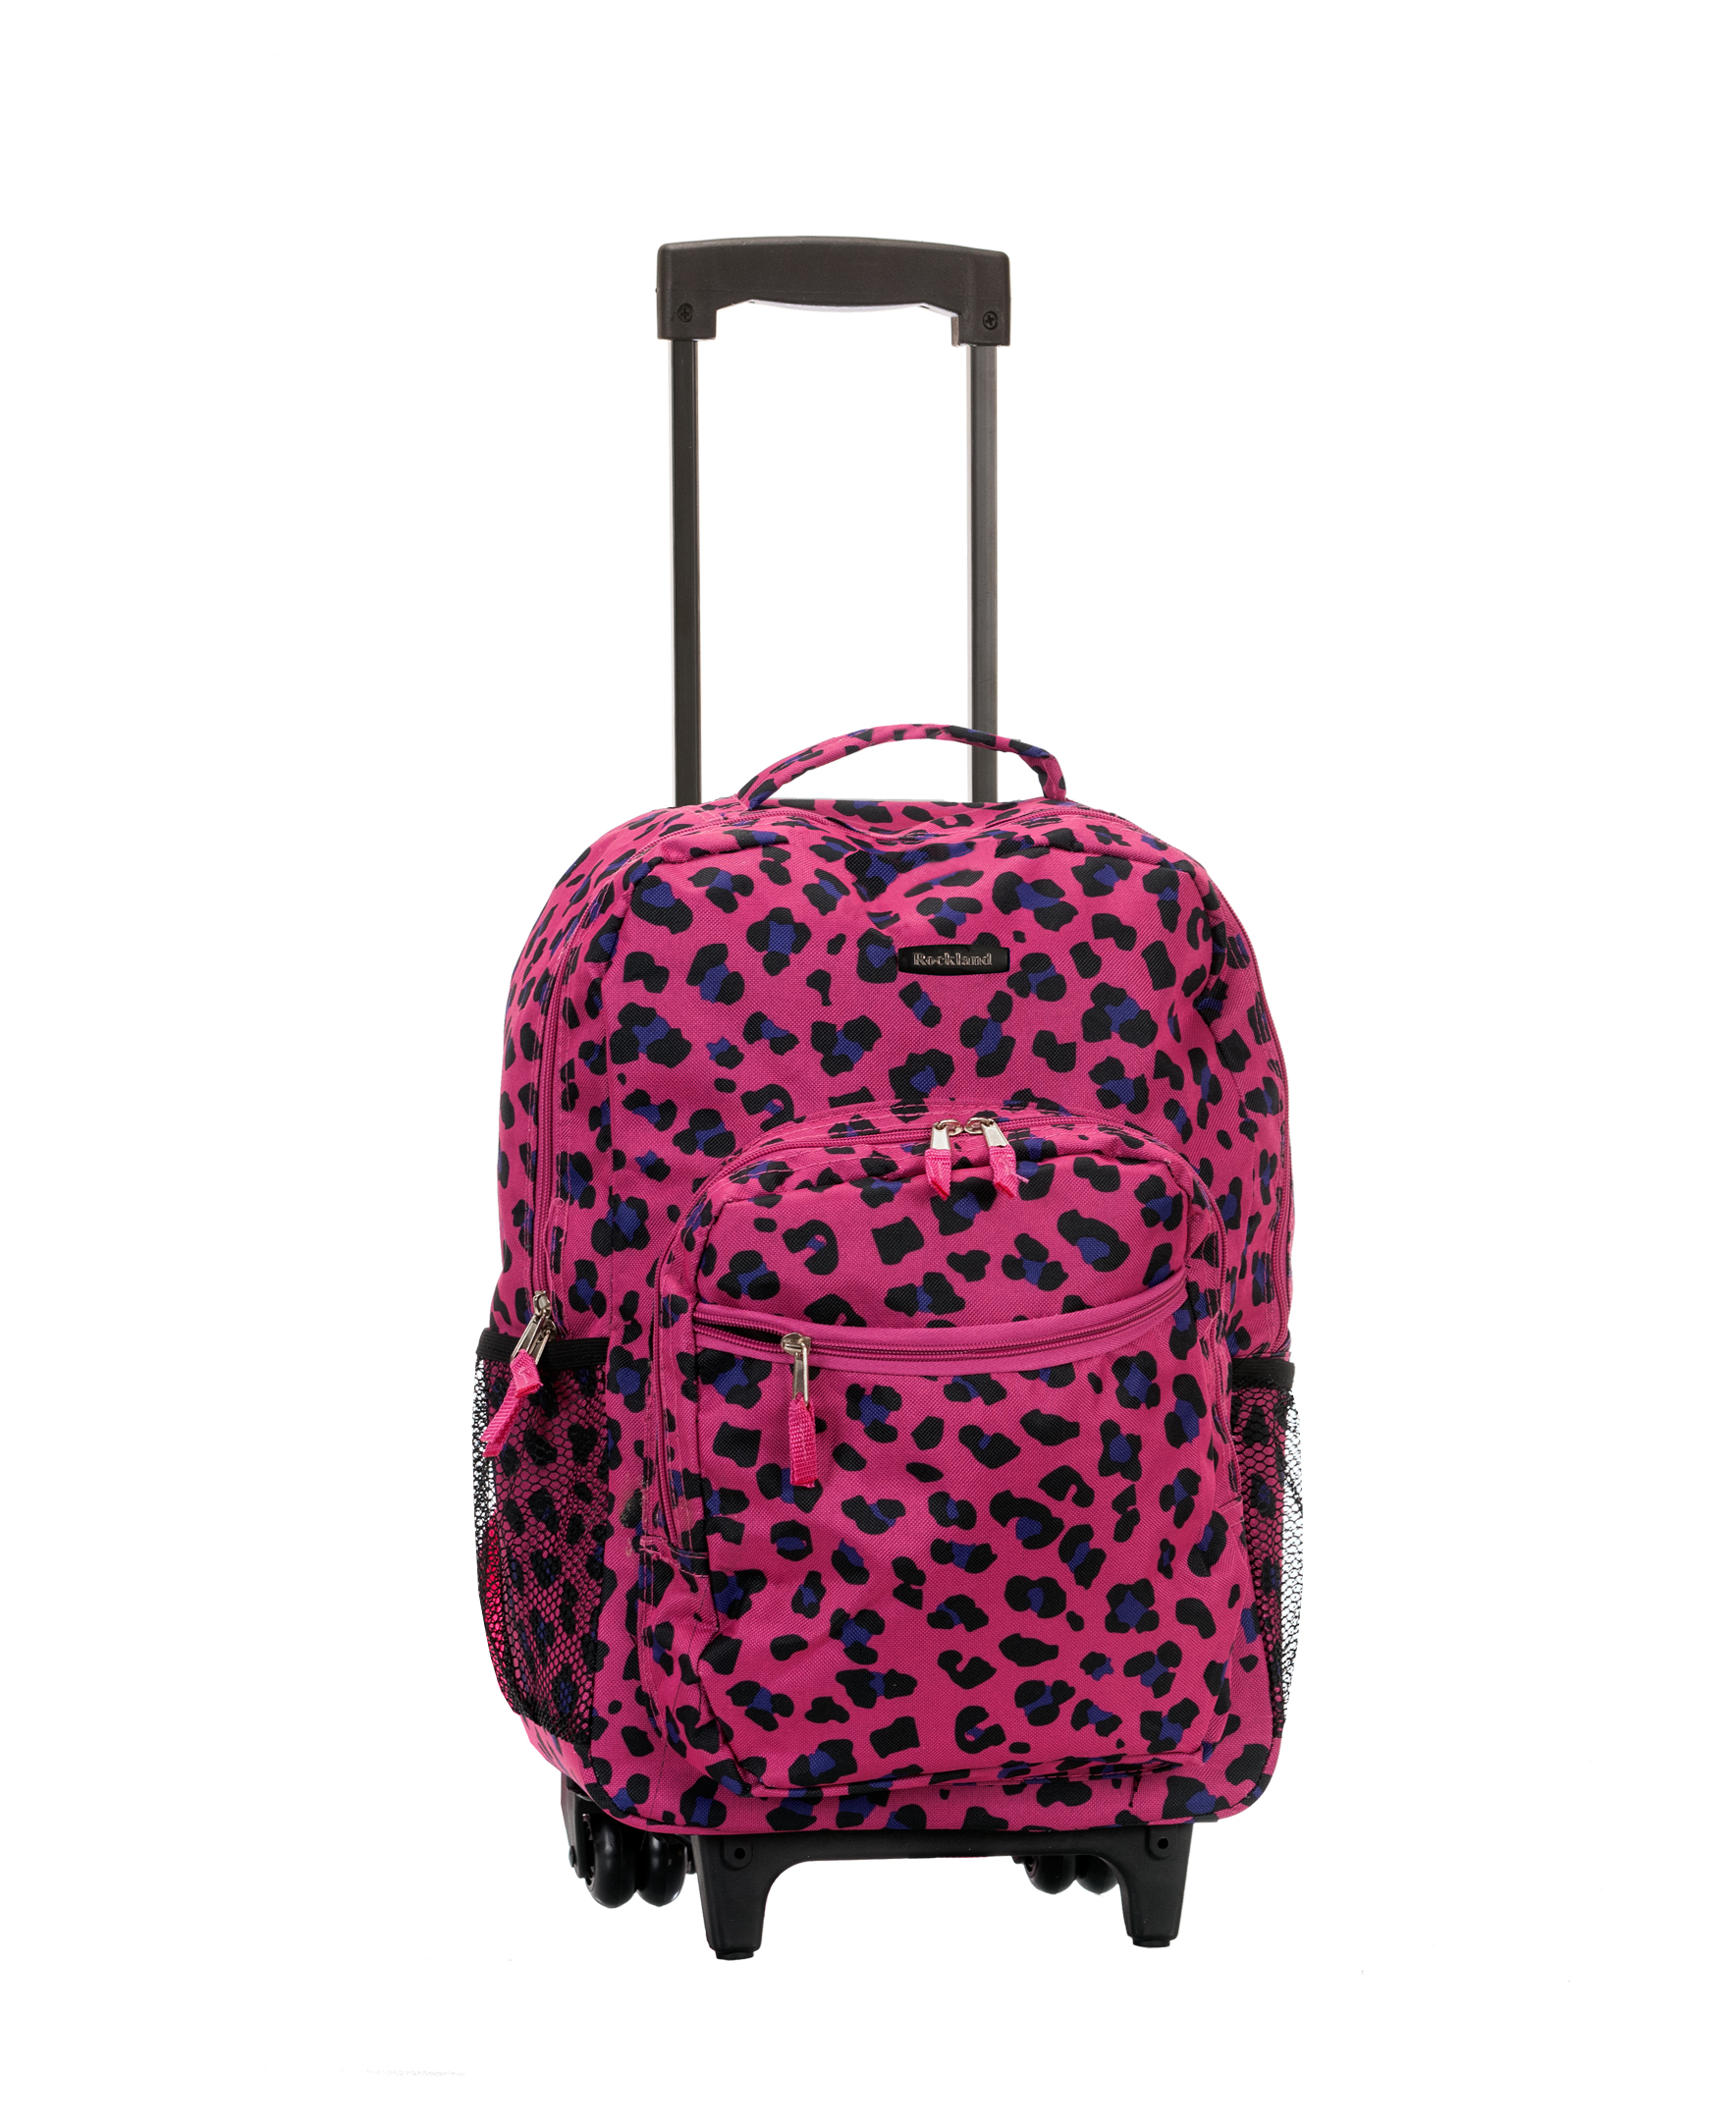 Rockland Unisex Luggage 17" Rolling Backpack R01 Magenta Leopard - image 1 of 3